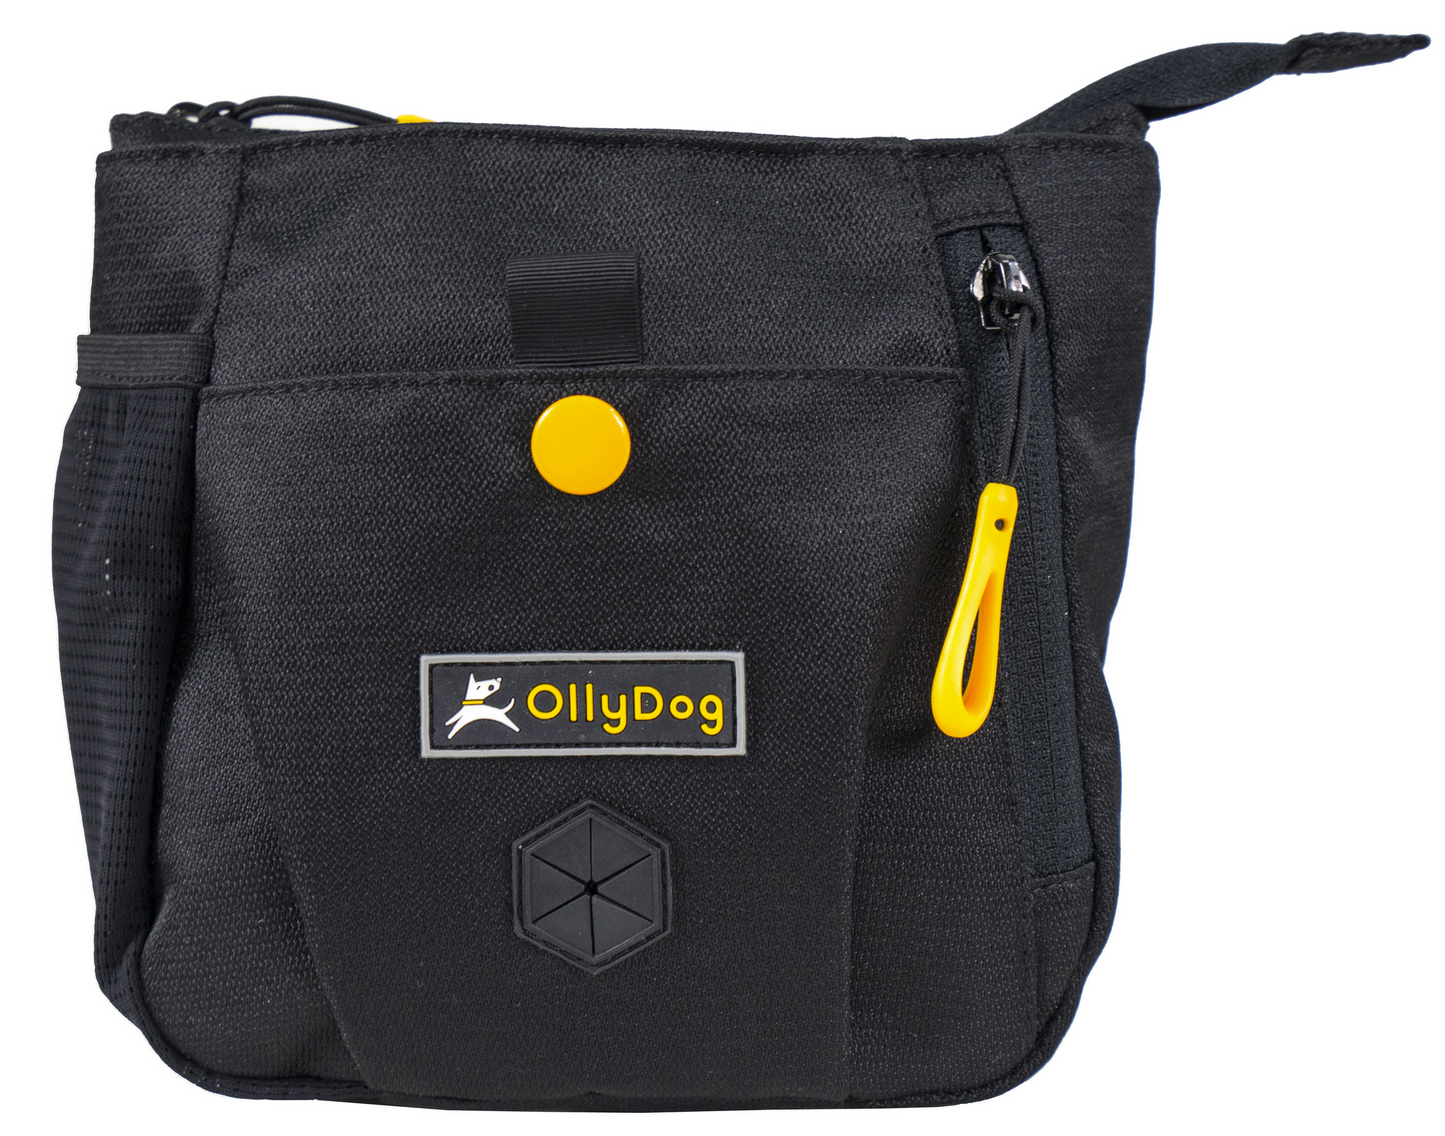 Olly Dog Backcountry Day Bag